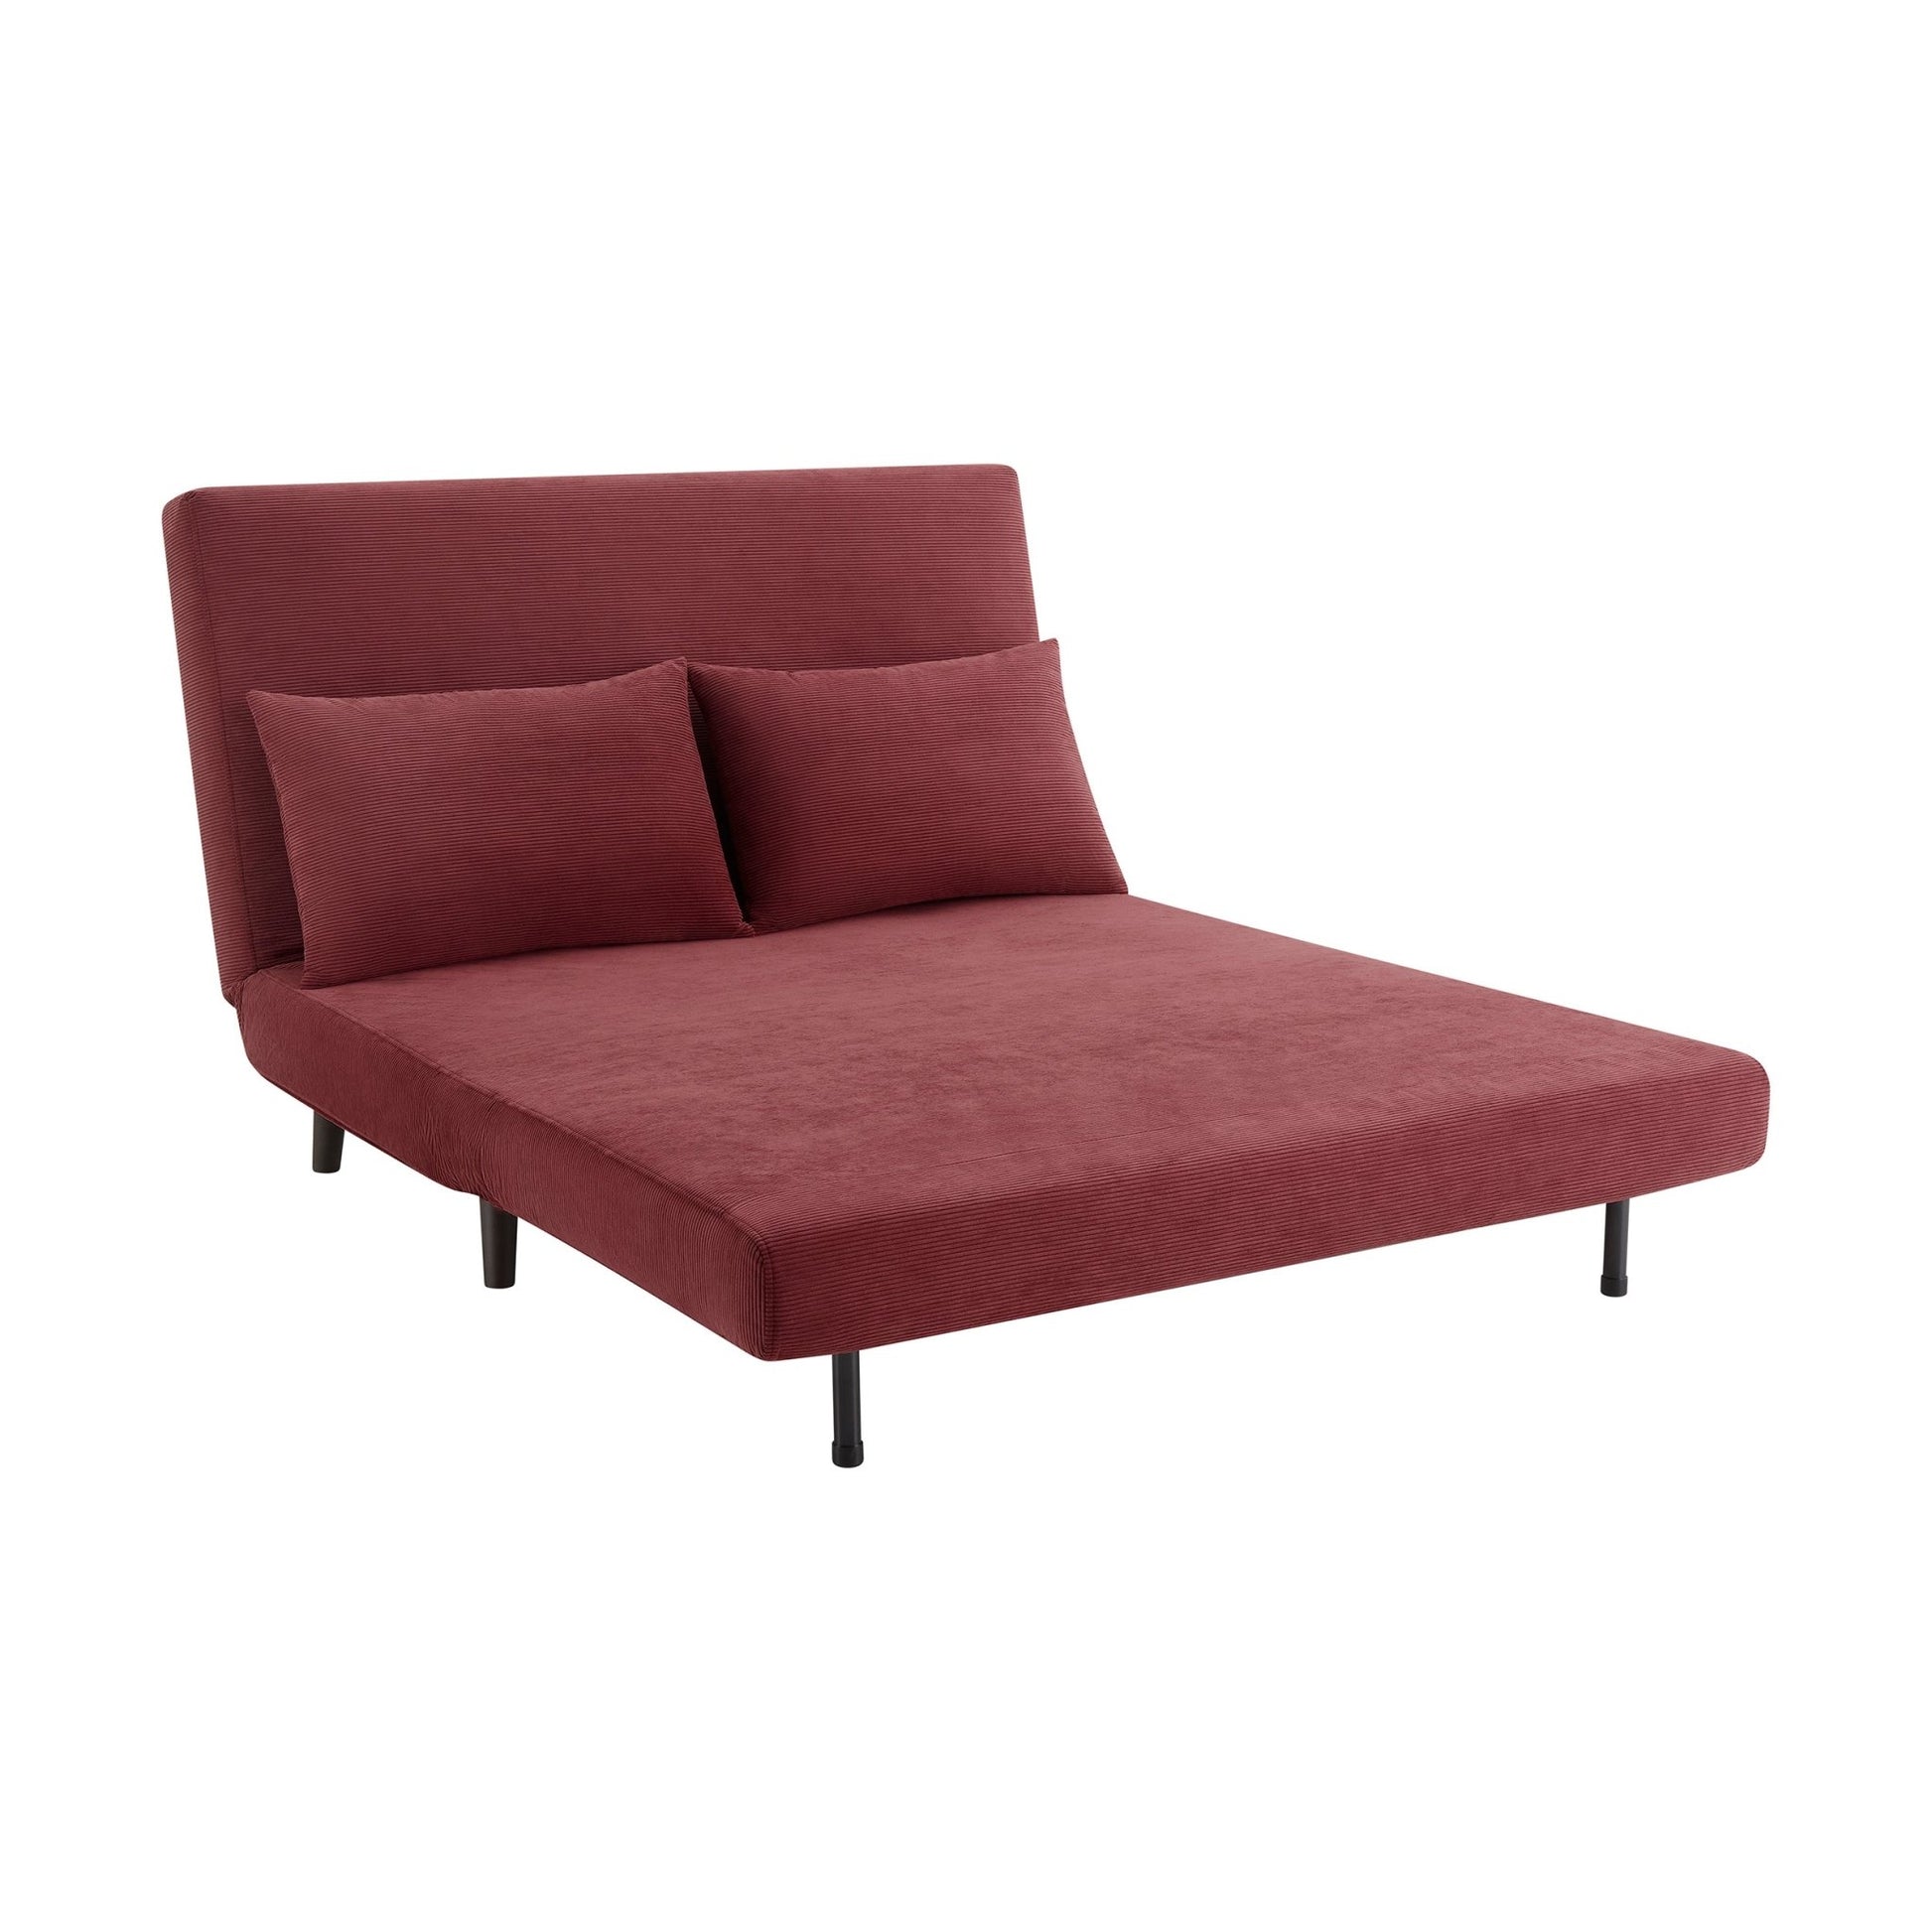 Seattle Double Click Clack Sofa Bed - Corduroy - Berry - DUSK